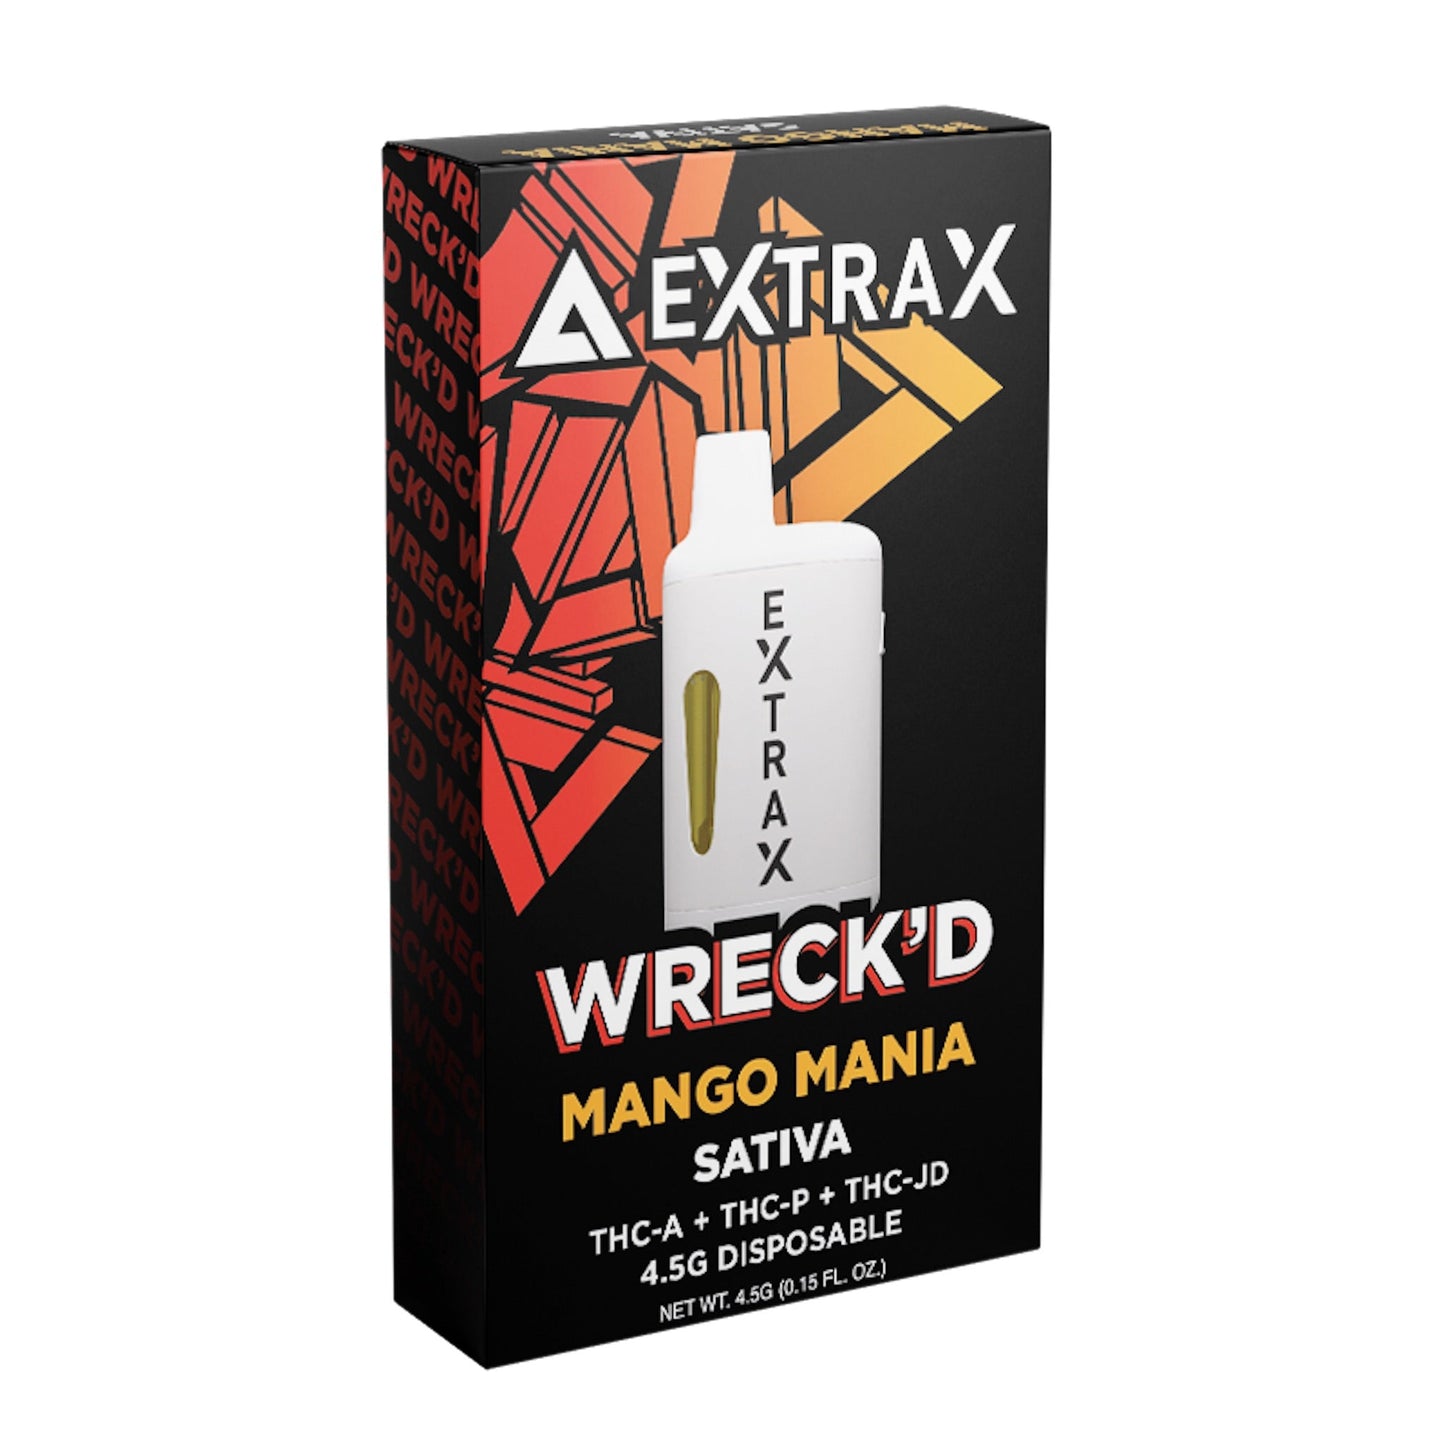 Extrax Wreckd THC-A + THC-P Vaporizer - 4500mg Mango Mania